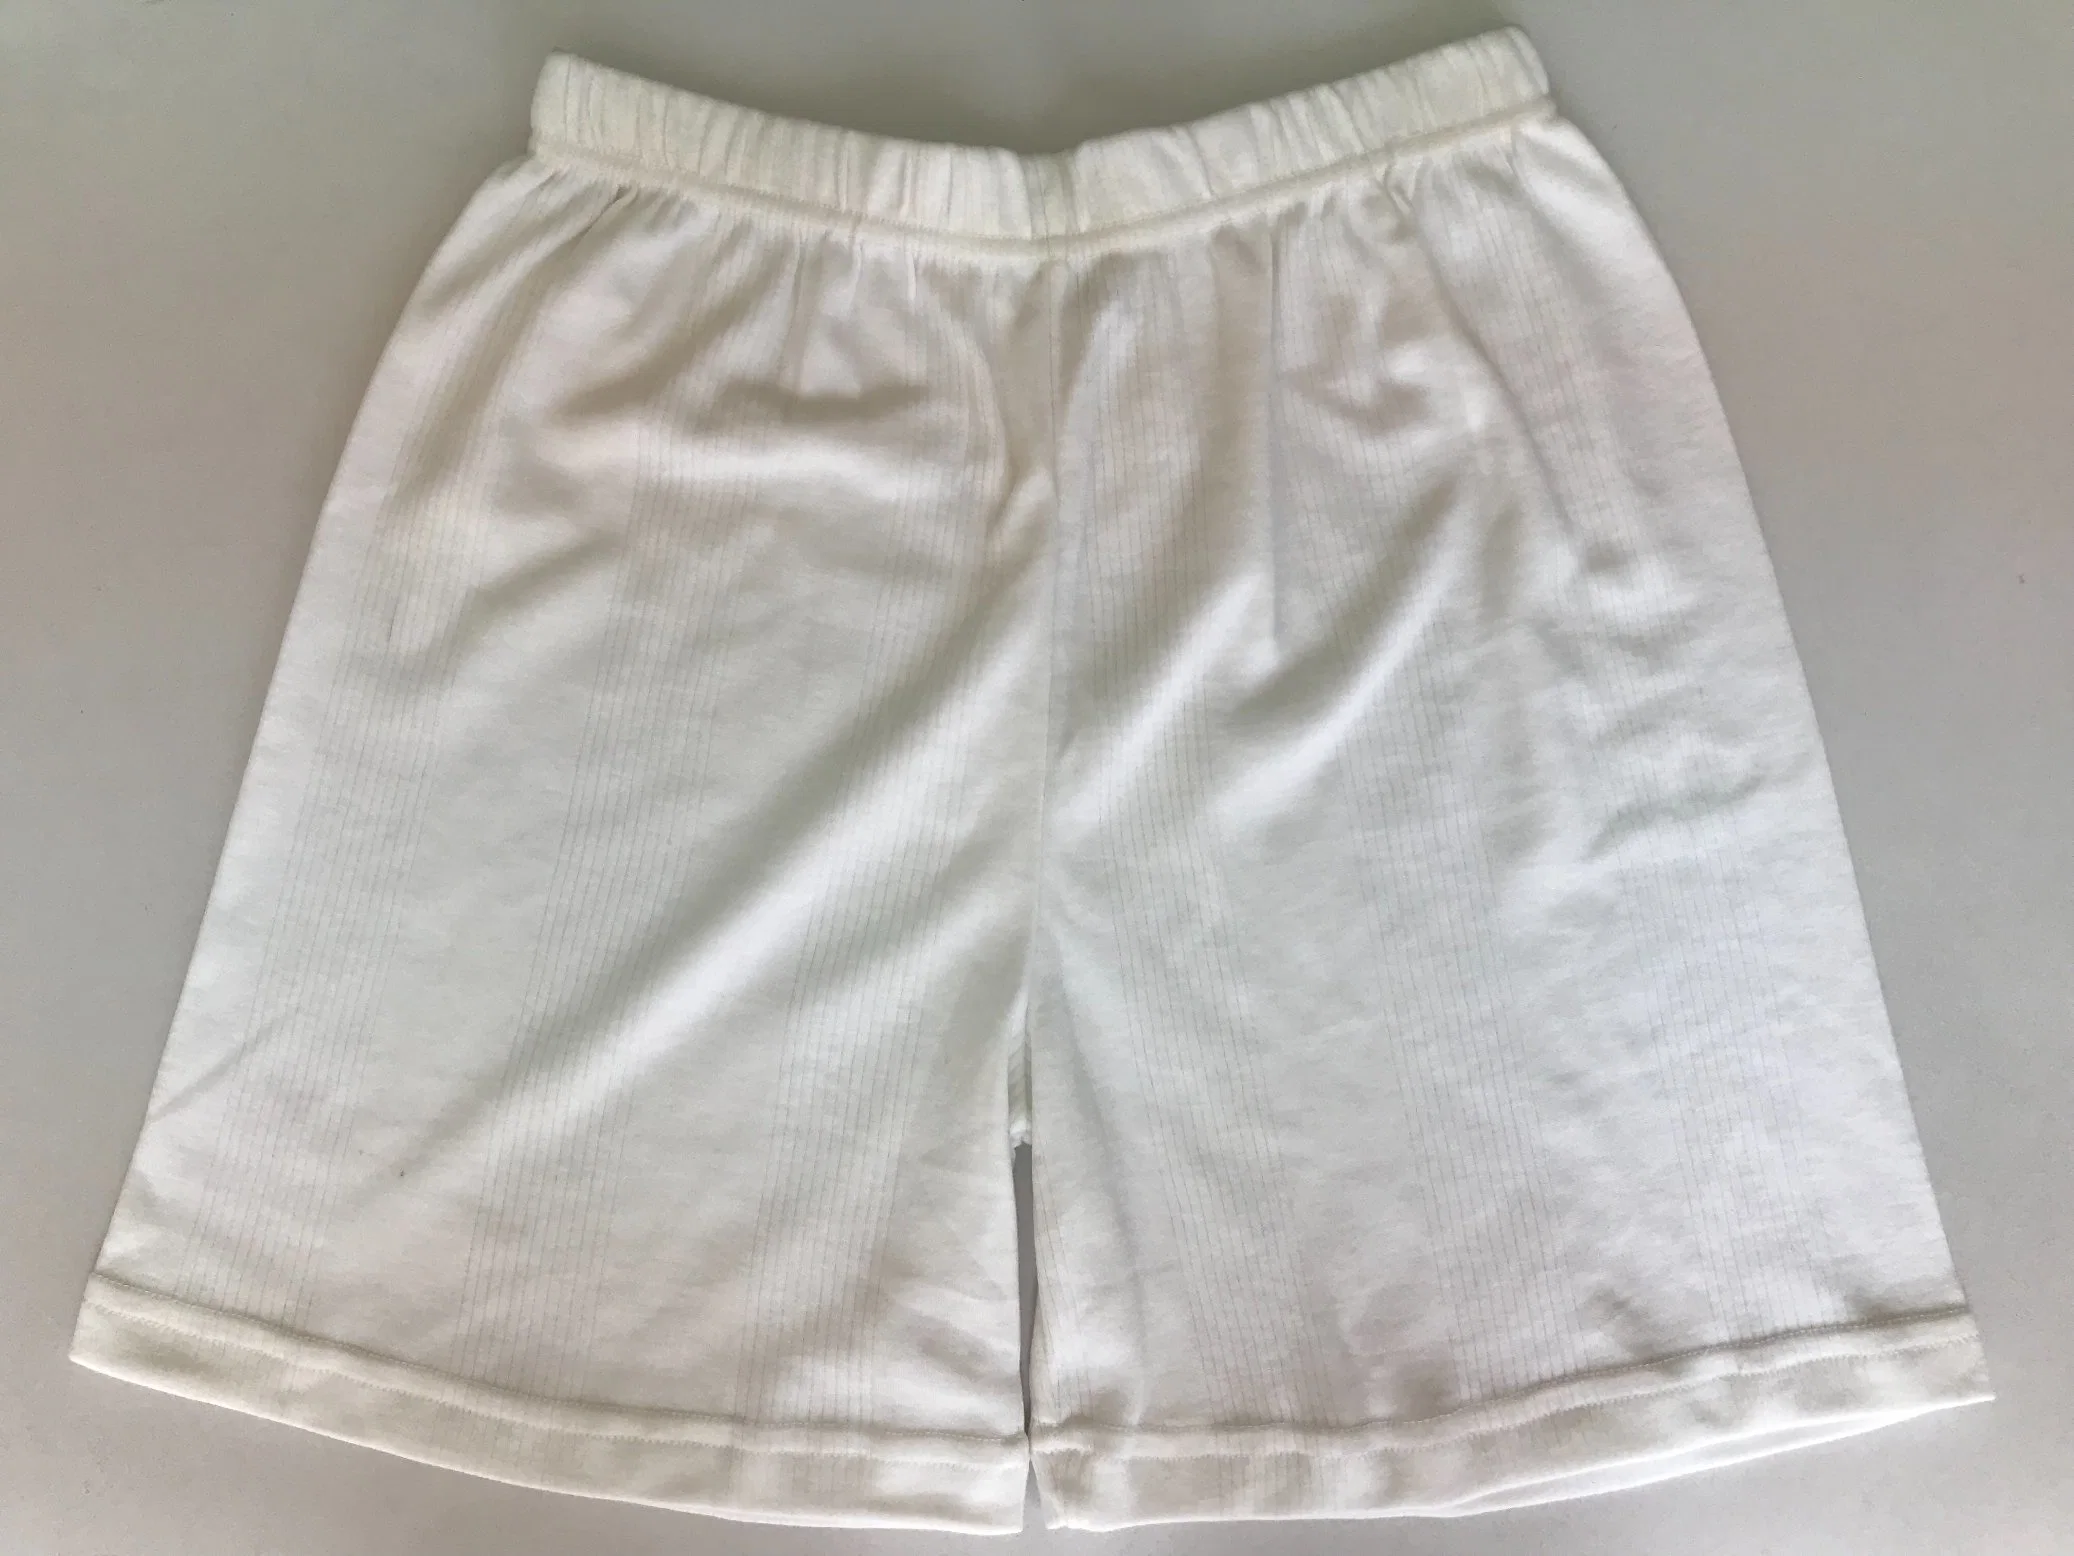 OEM Factory Breathable Underwear Men Custom Boxer Briefs Printed Lovers Unisex Cotton Underwear Set